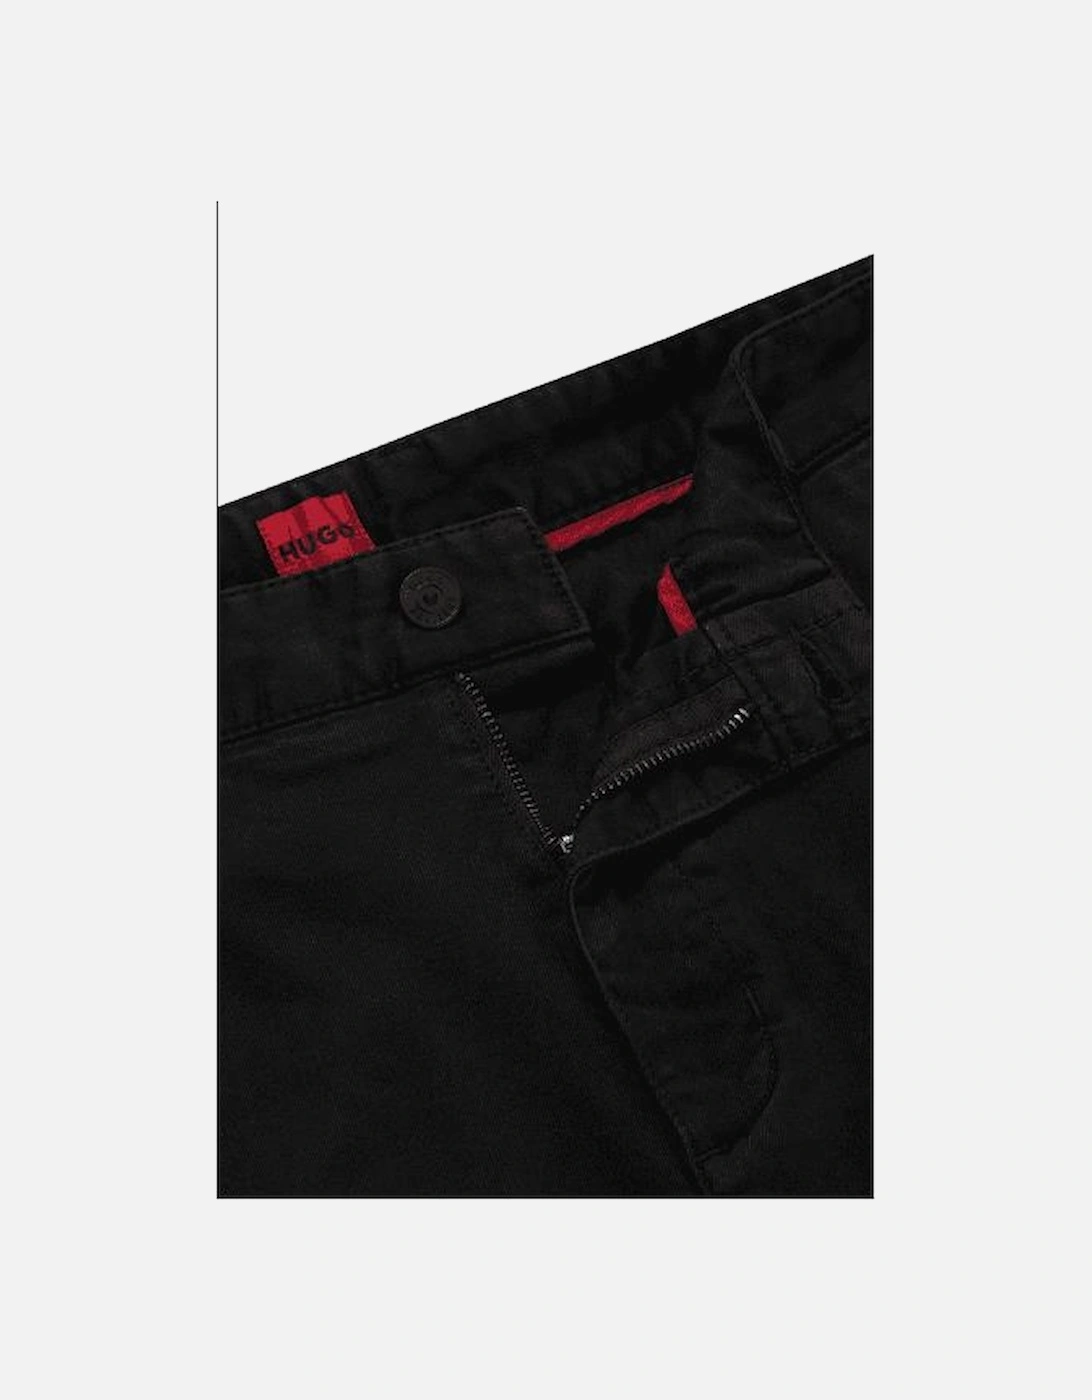 Glian231D Zip Pocket Black Cargo Pants